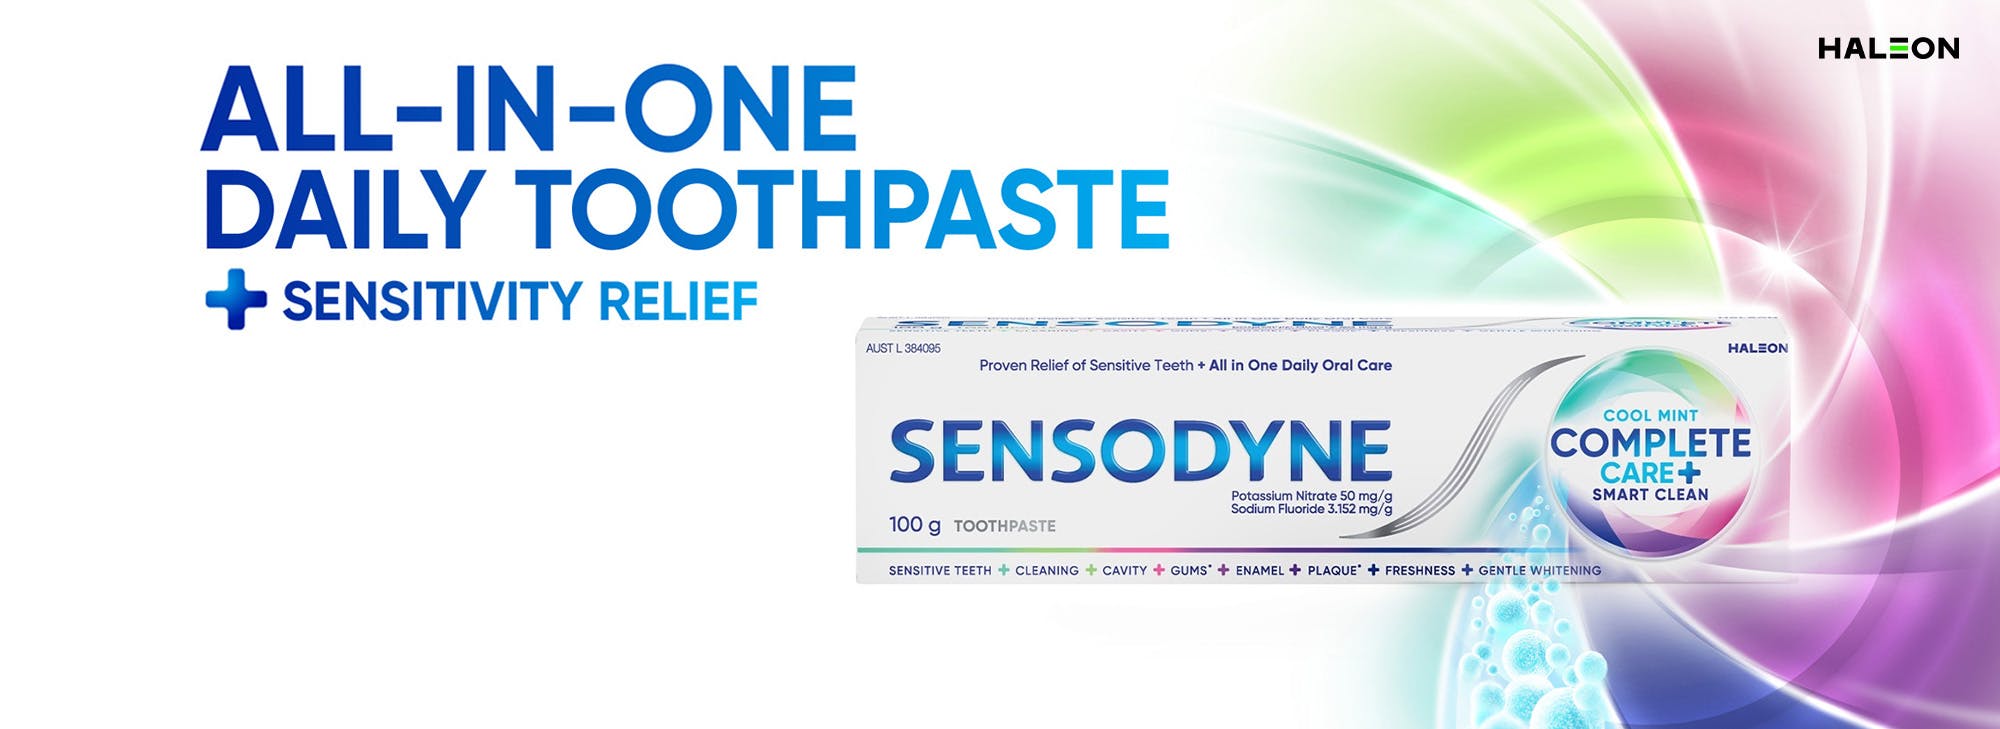 Sensodyne Complete Care Smart Clean